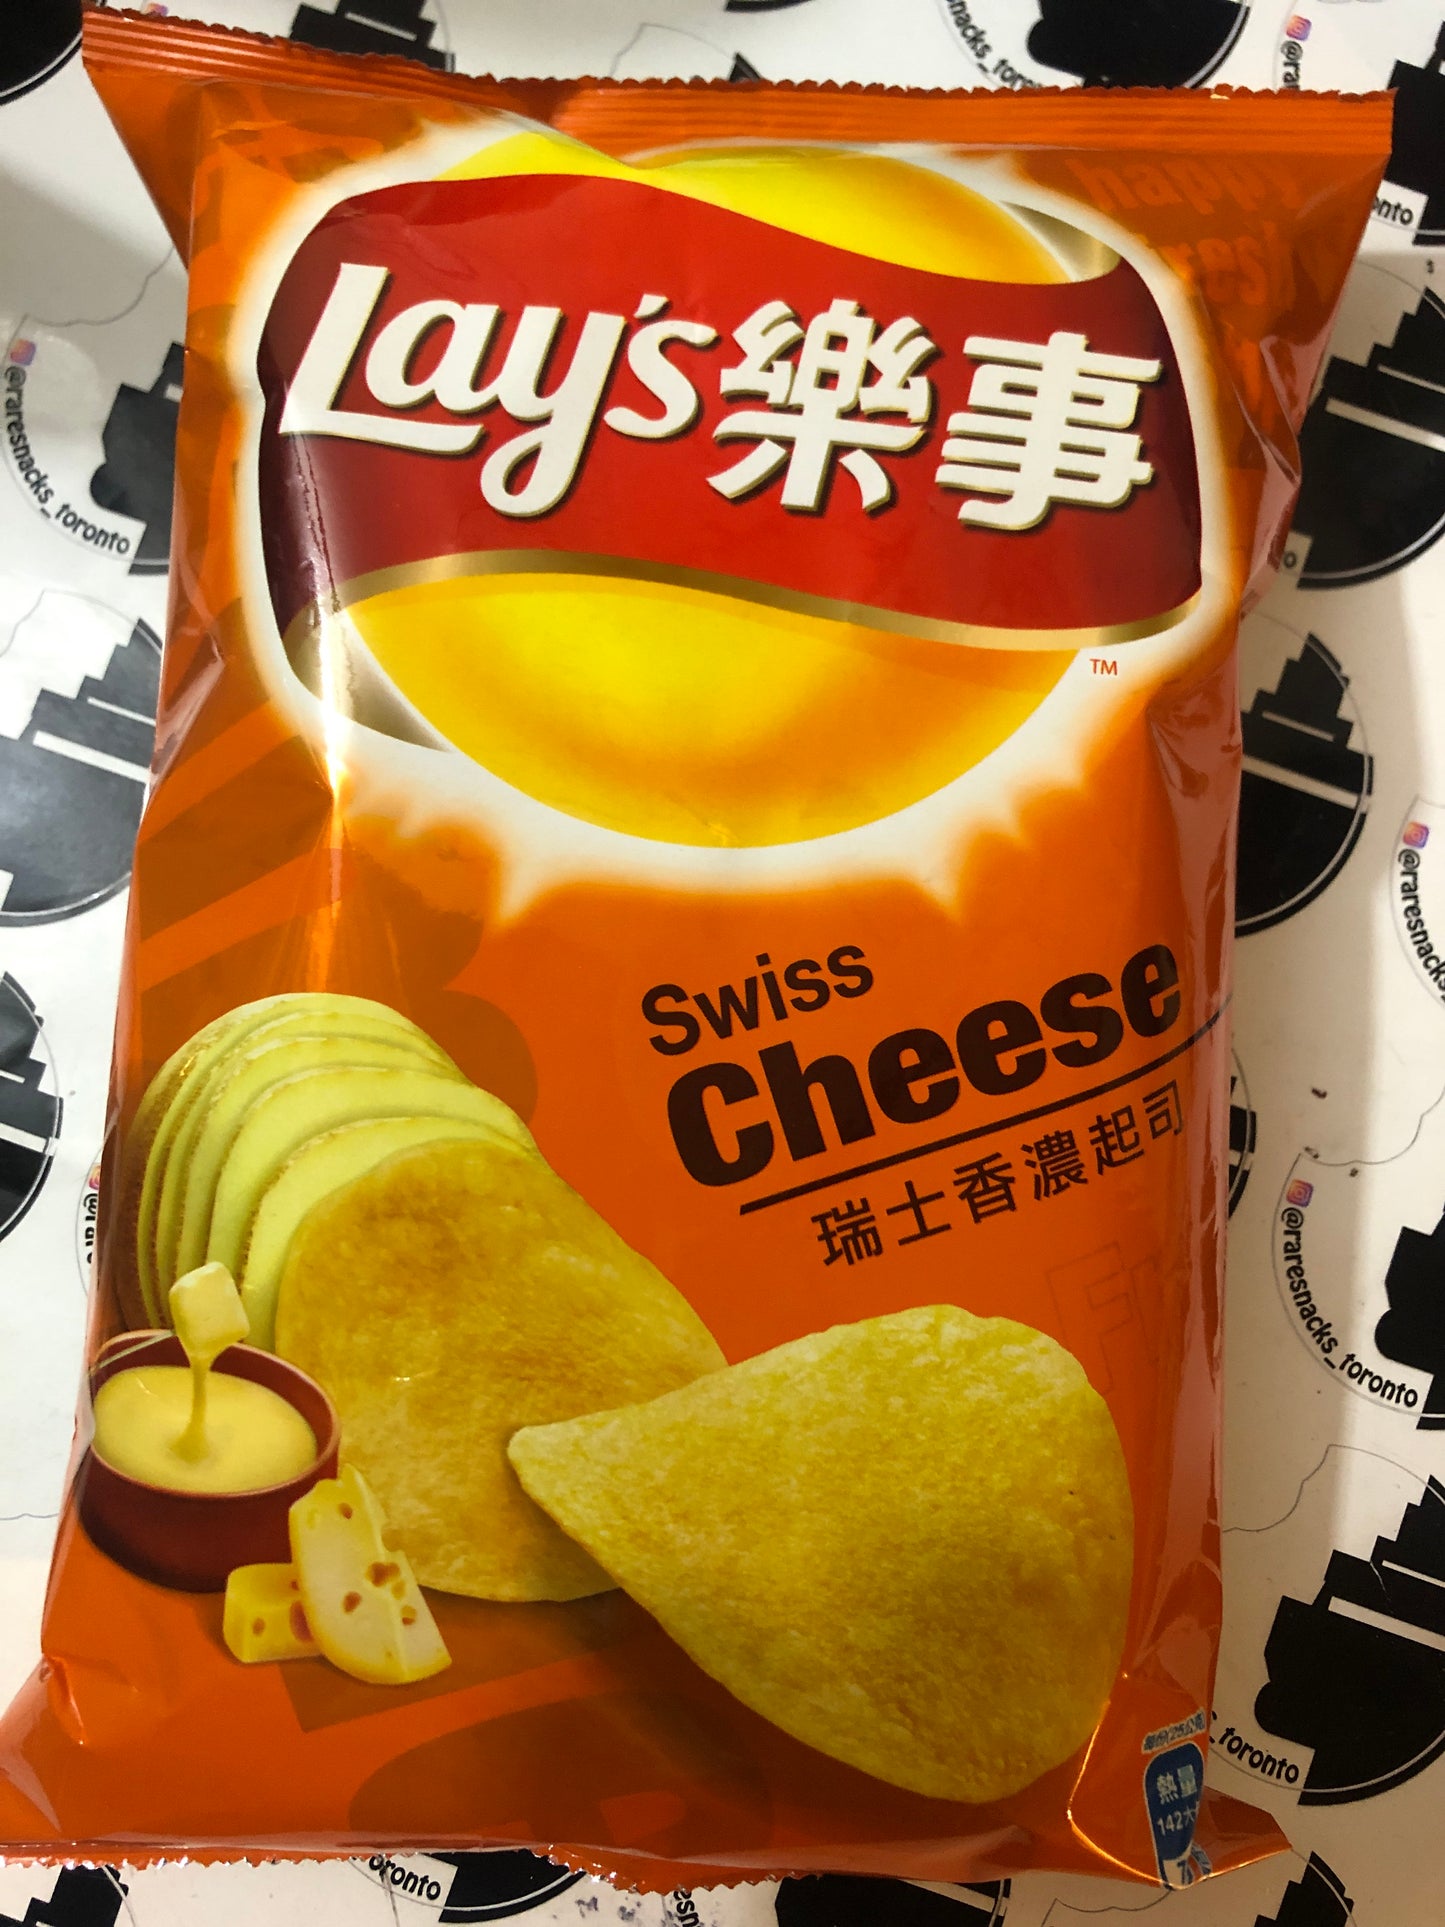 Lays Swiss Cheese